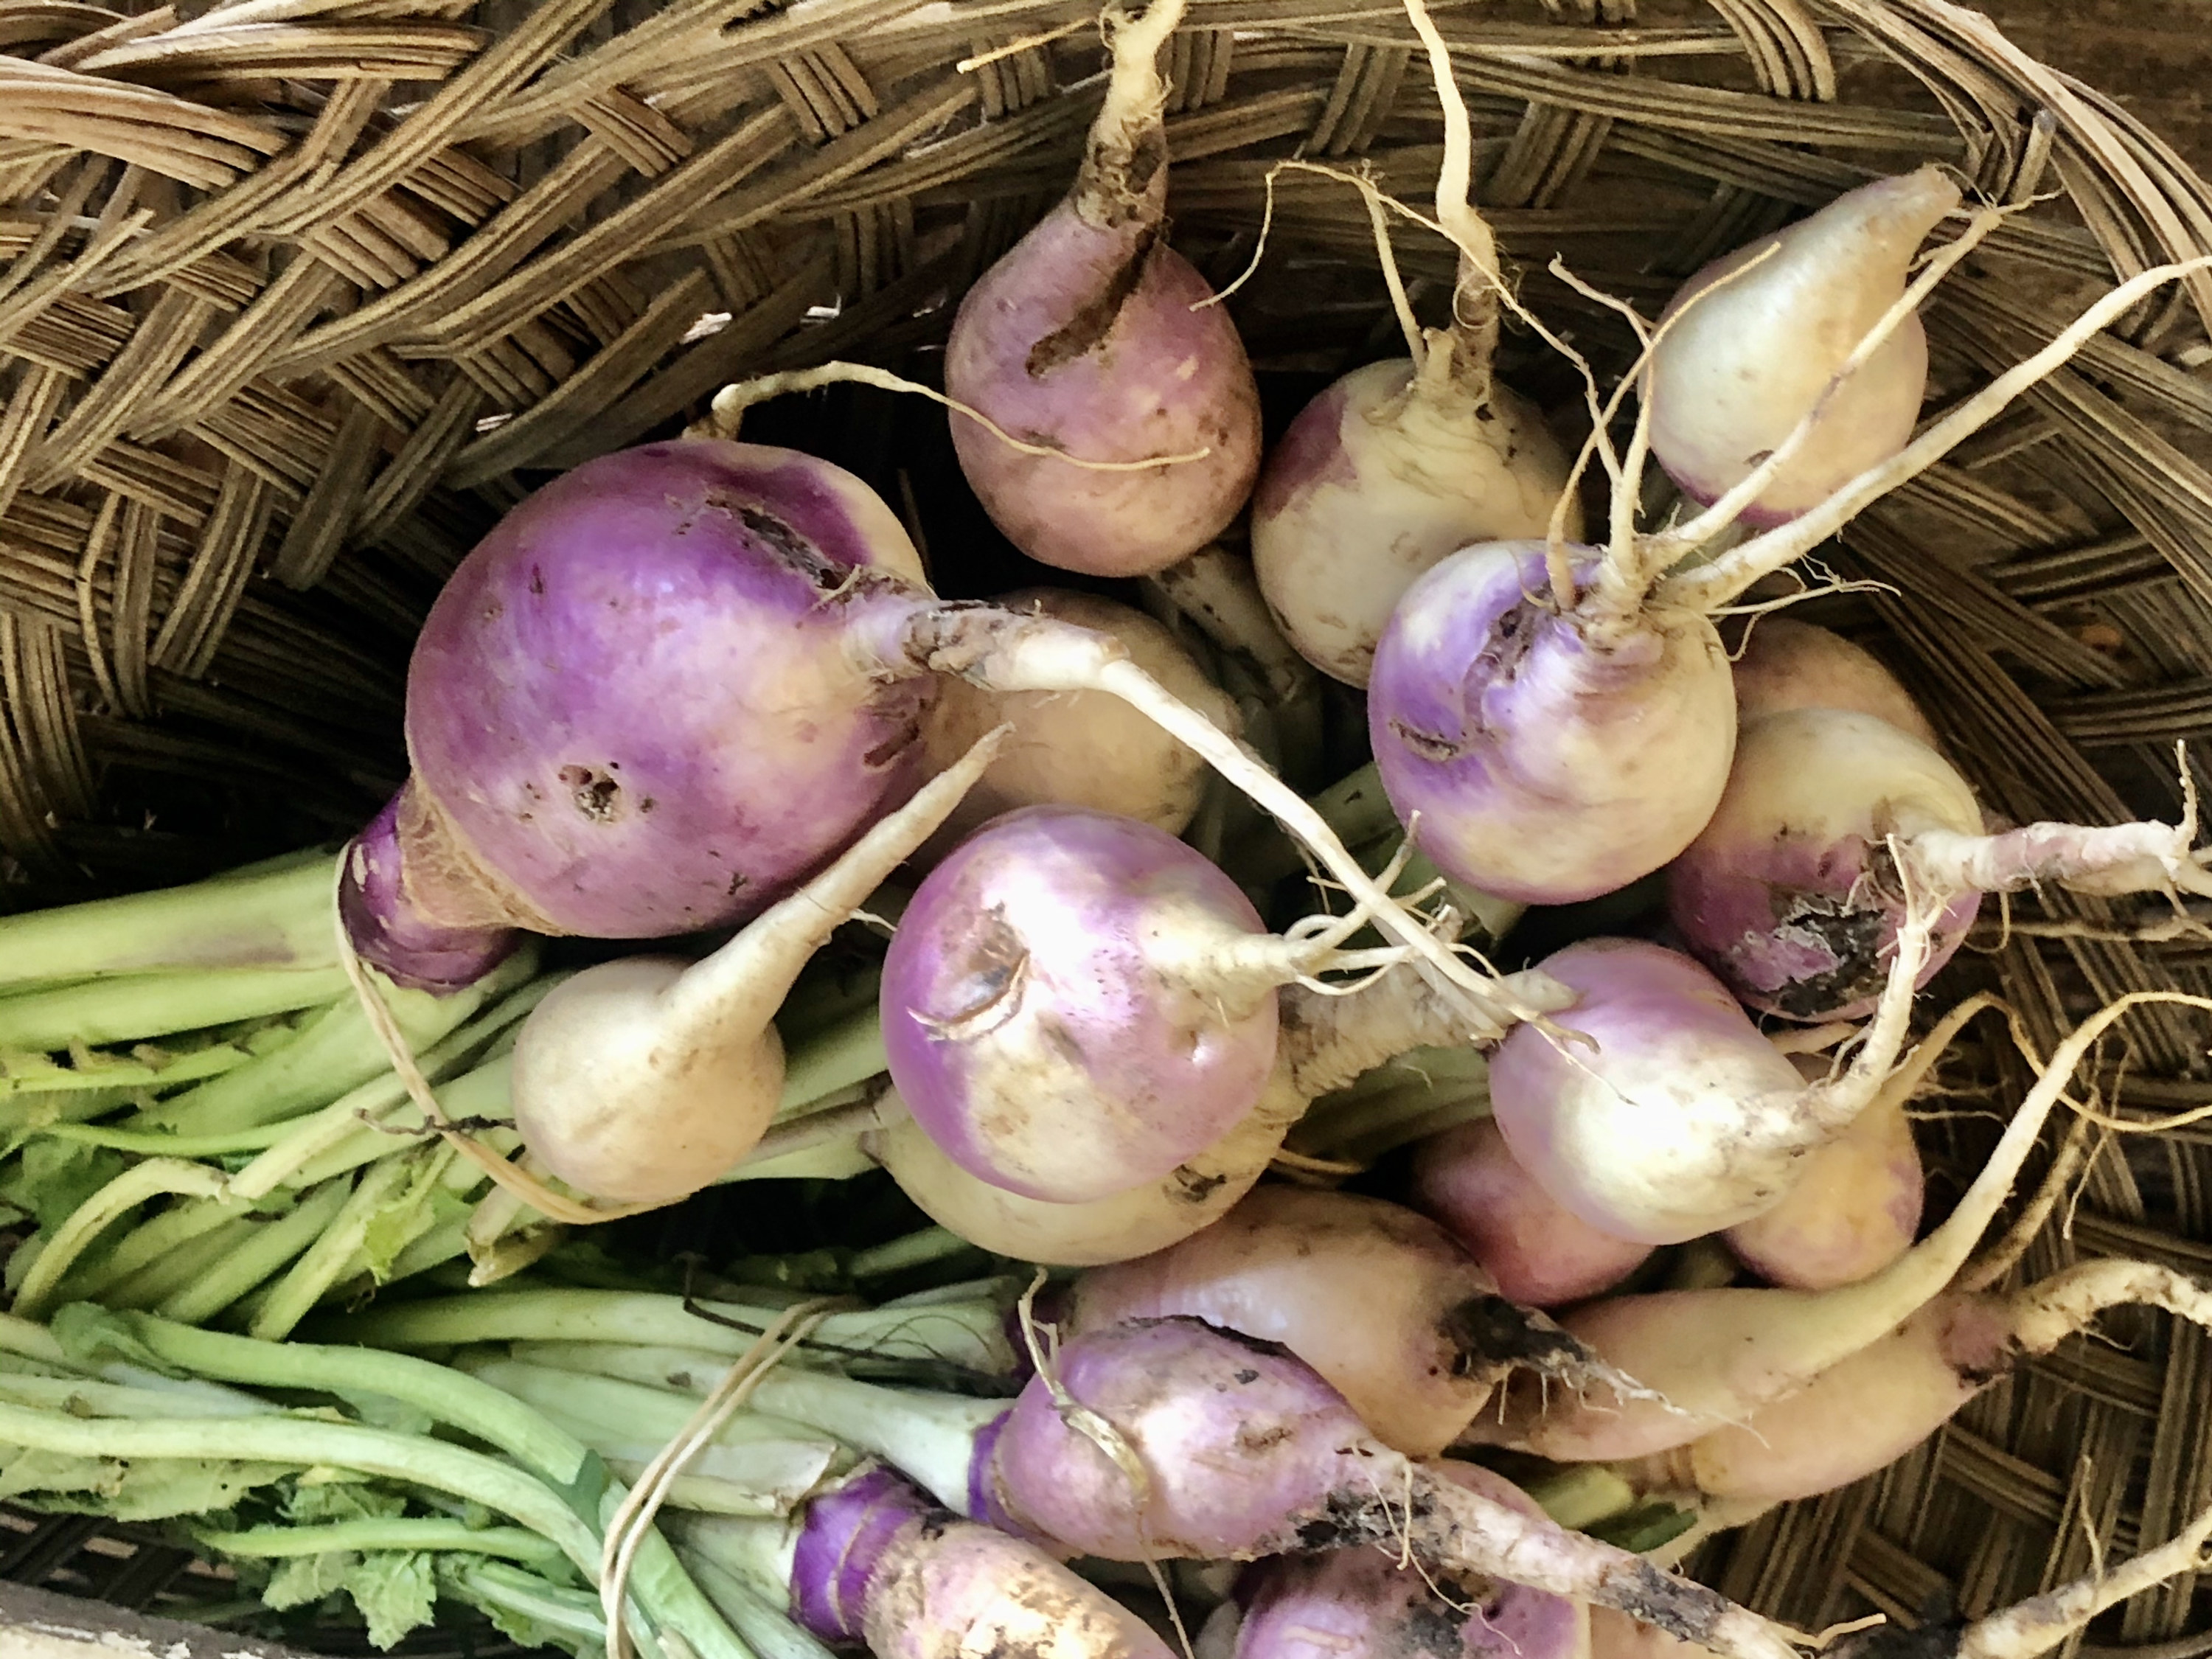 Fresh turnips in a basket